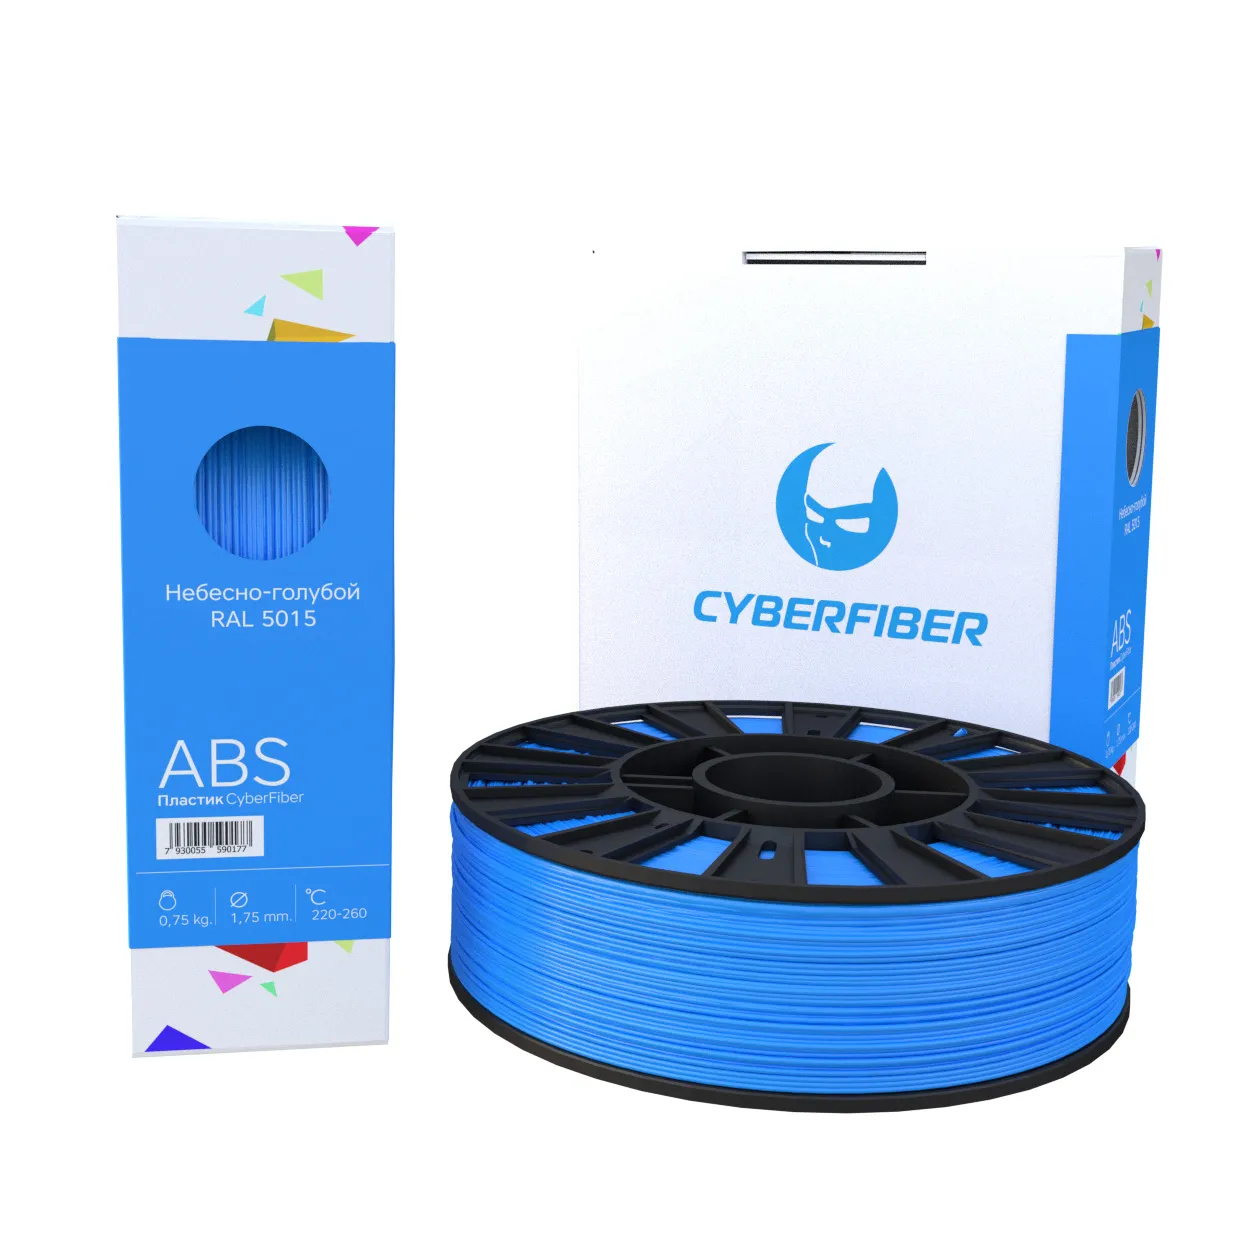 ABS пластик CyberFiber 1,75, небесно-голубой, 750 г